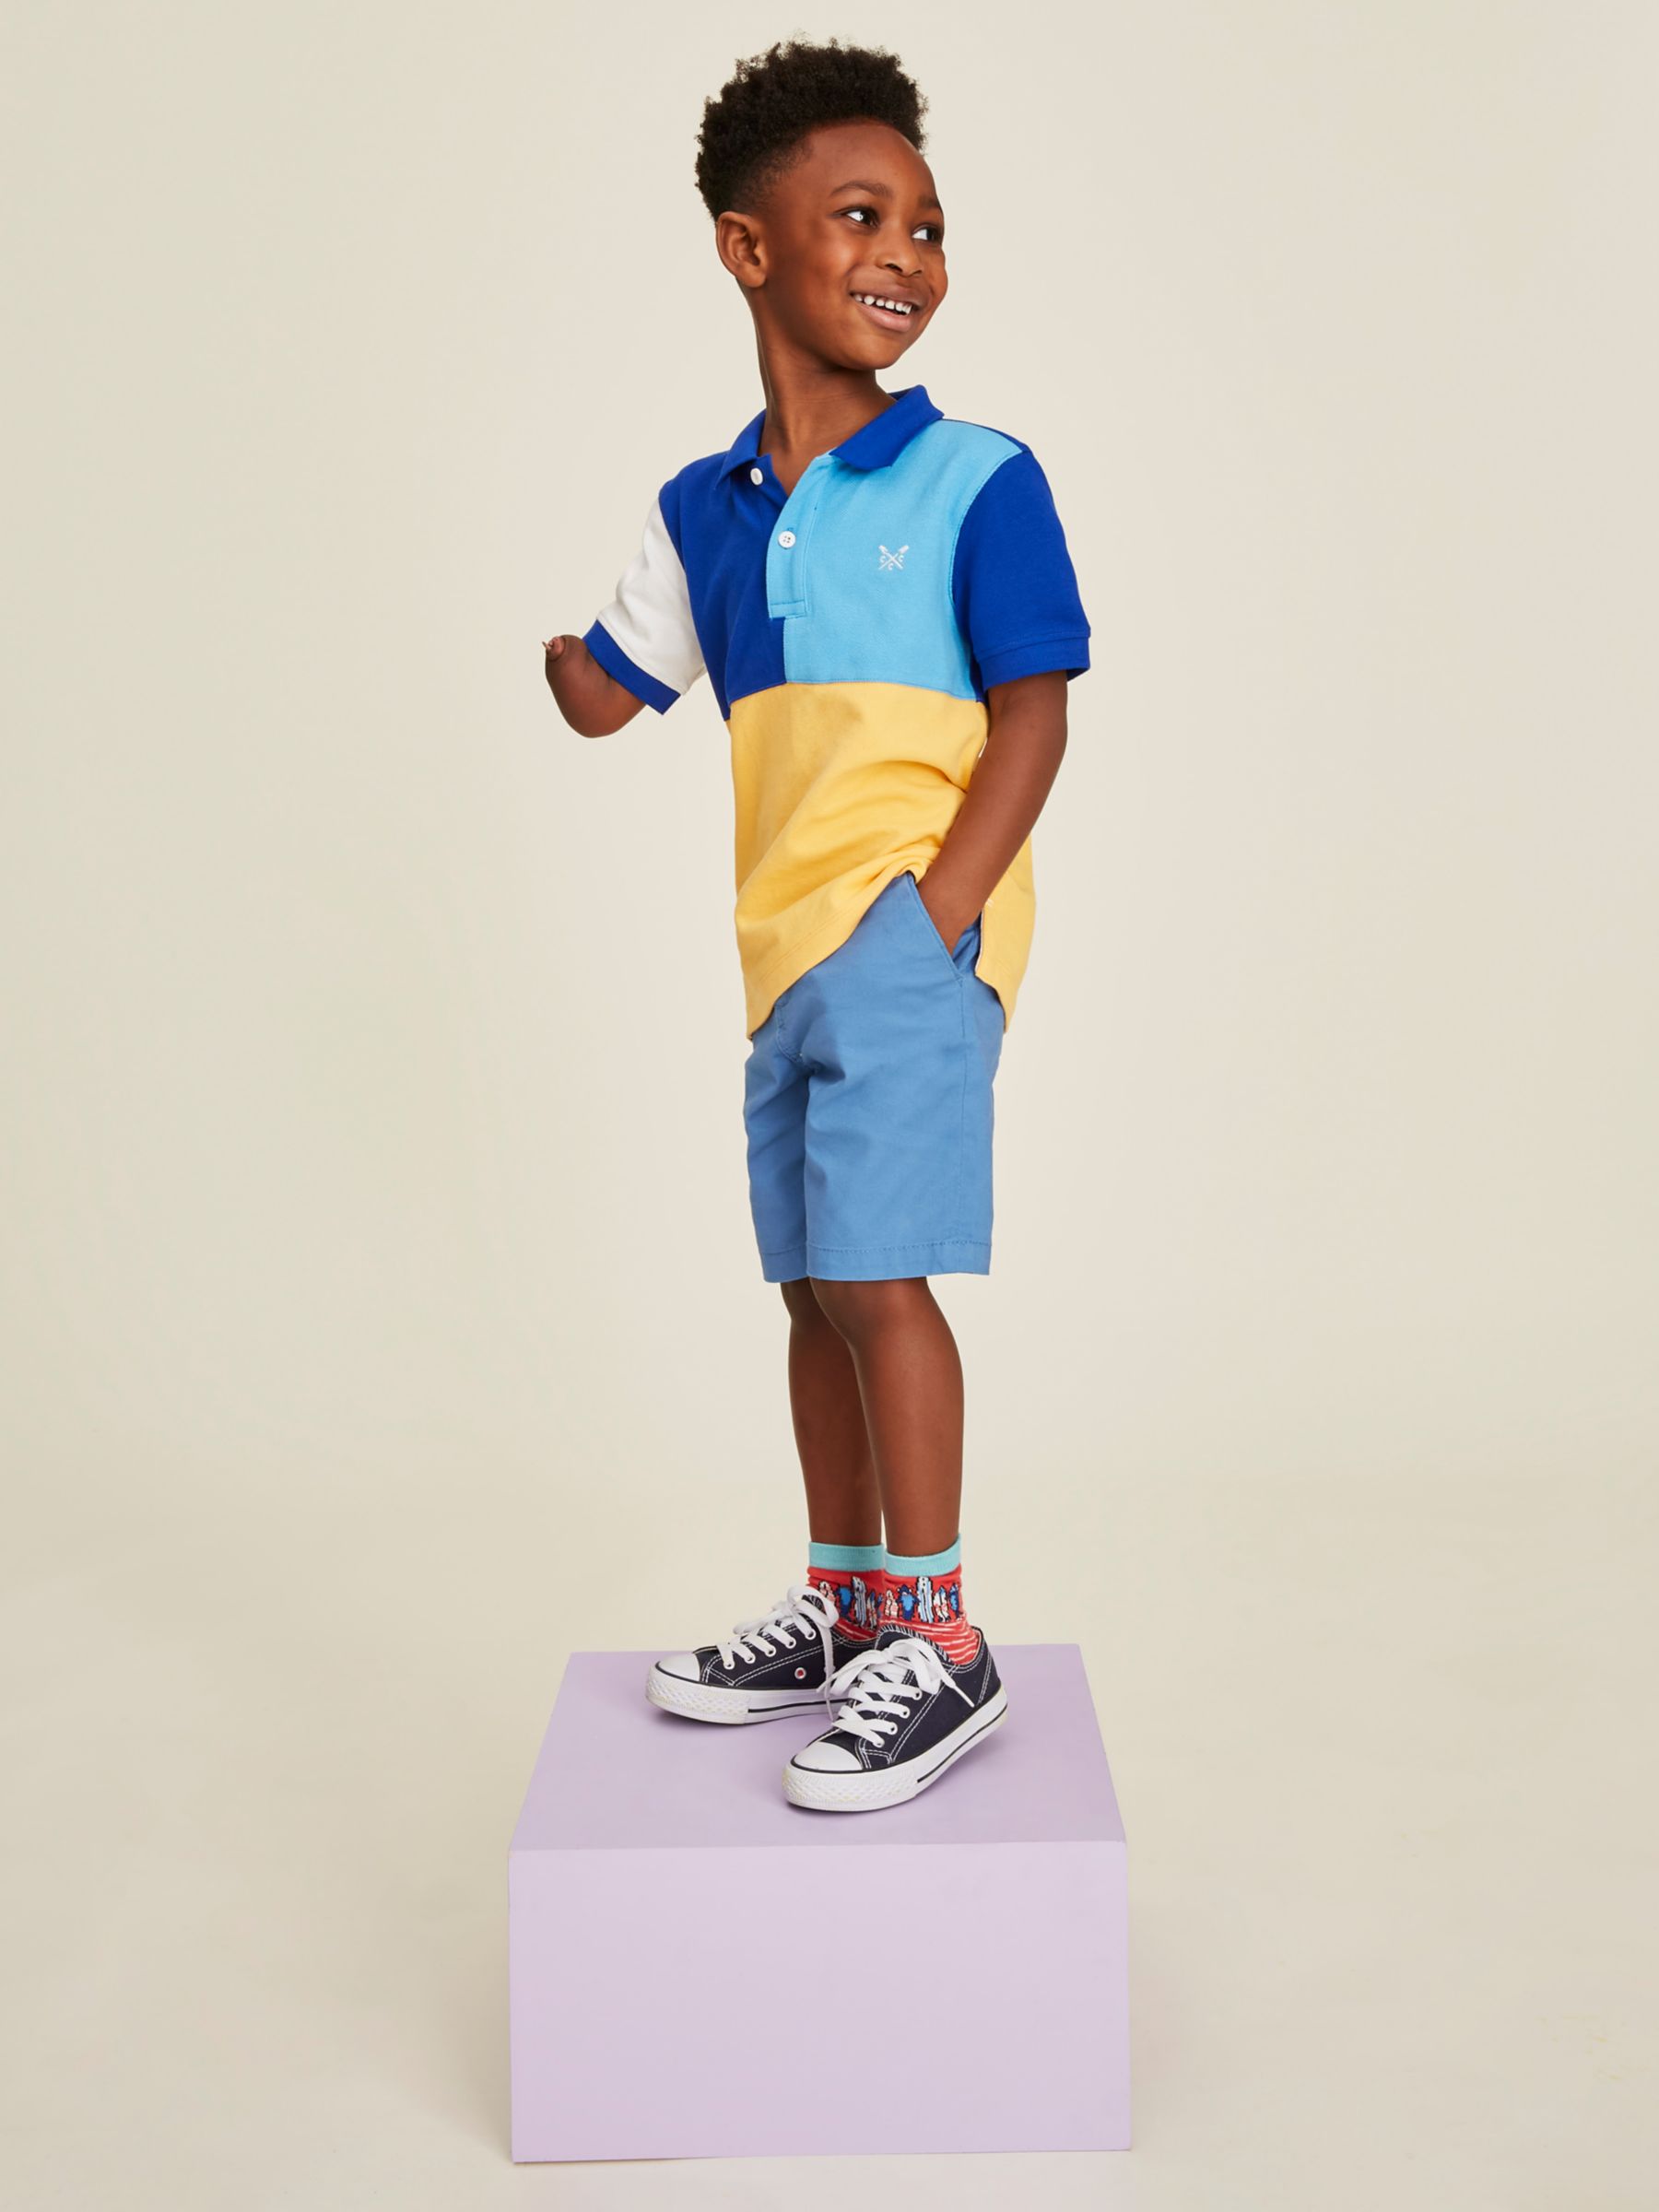 Crew Clothing Kids' Harlequin Pique Polo Shirt, Multi, 7-8 years